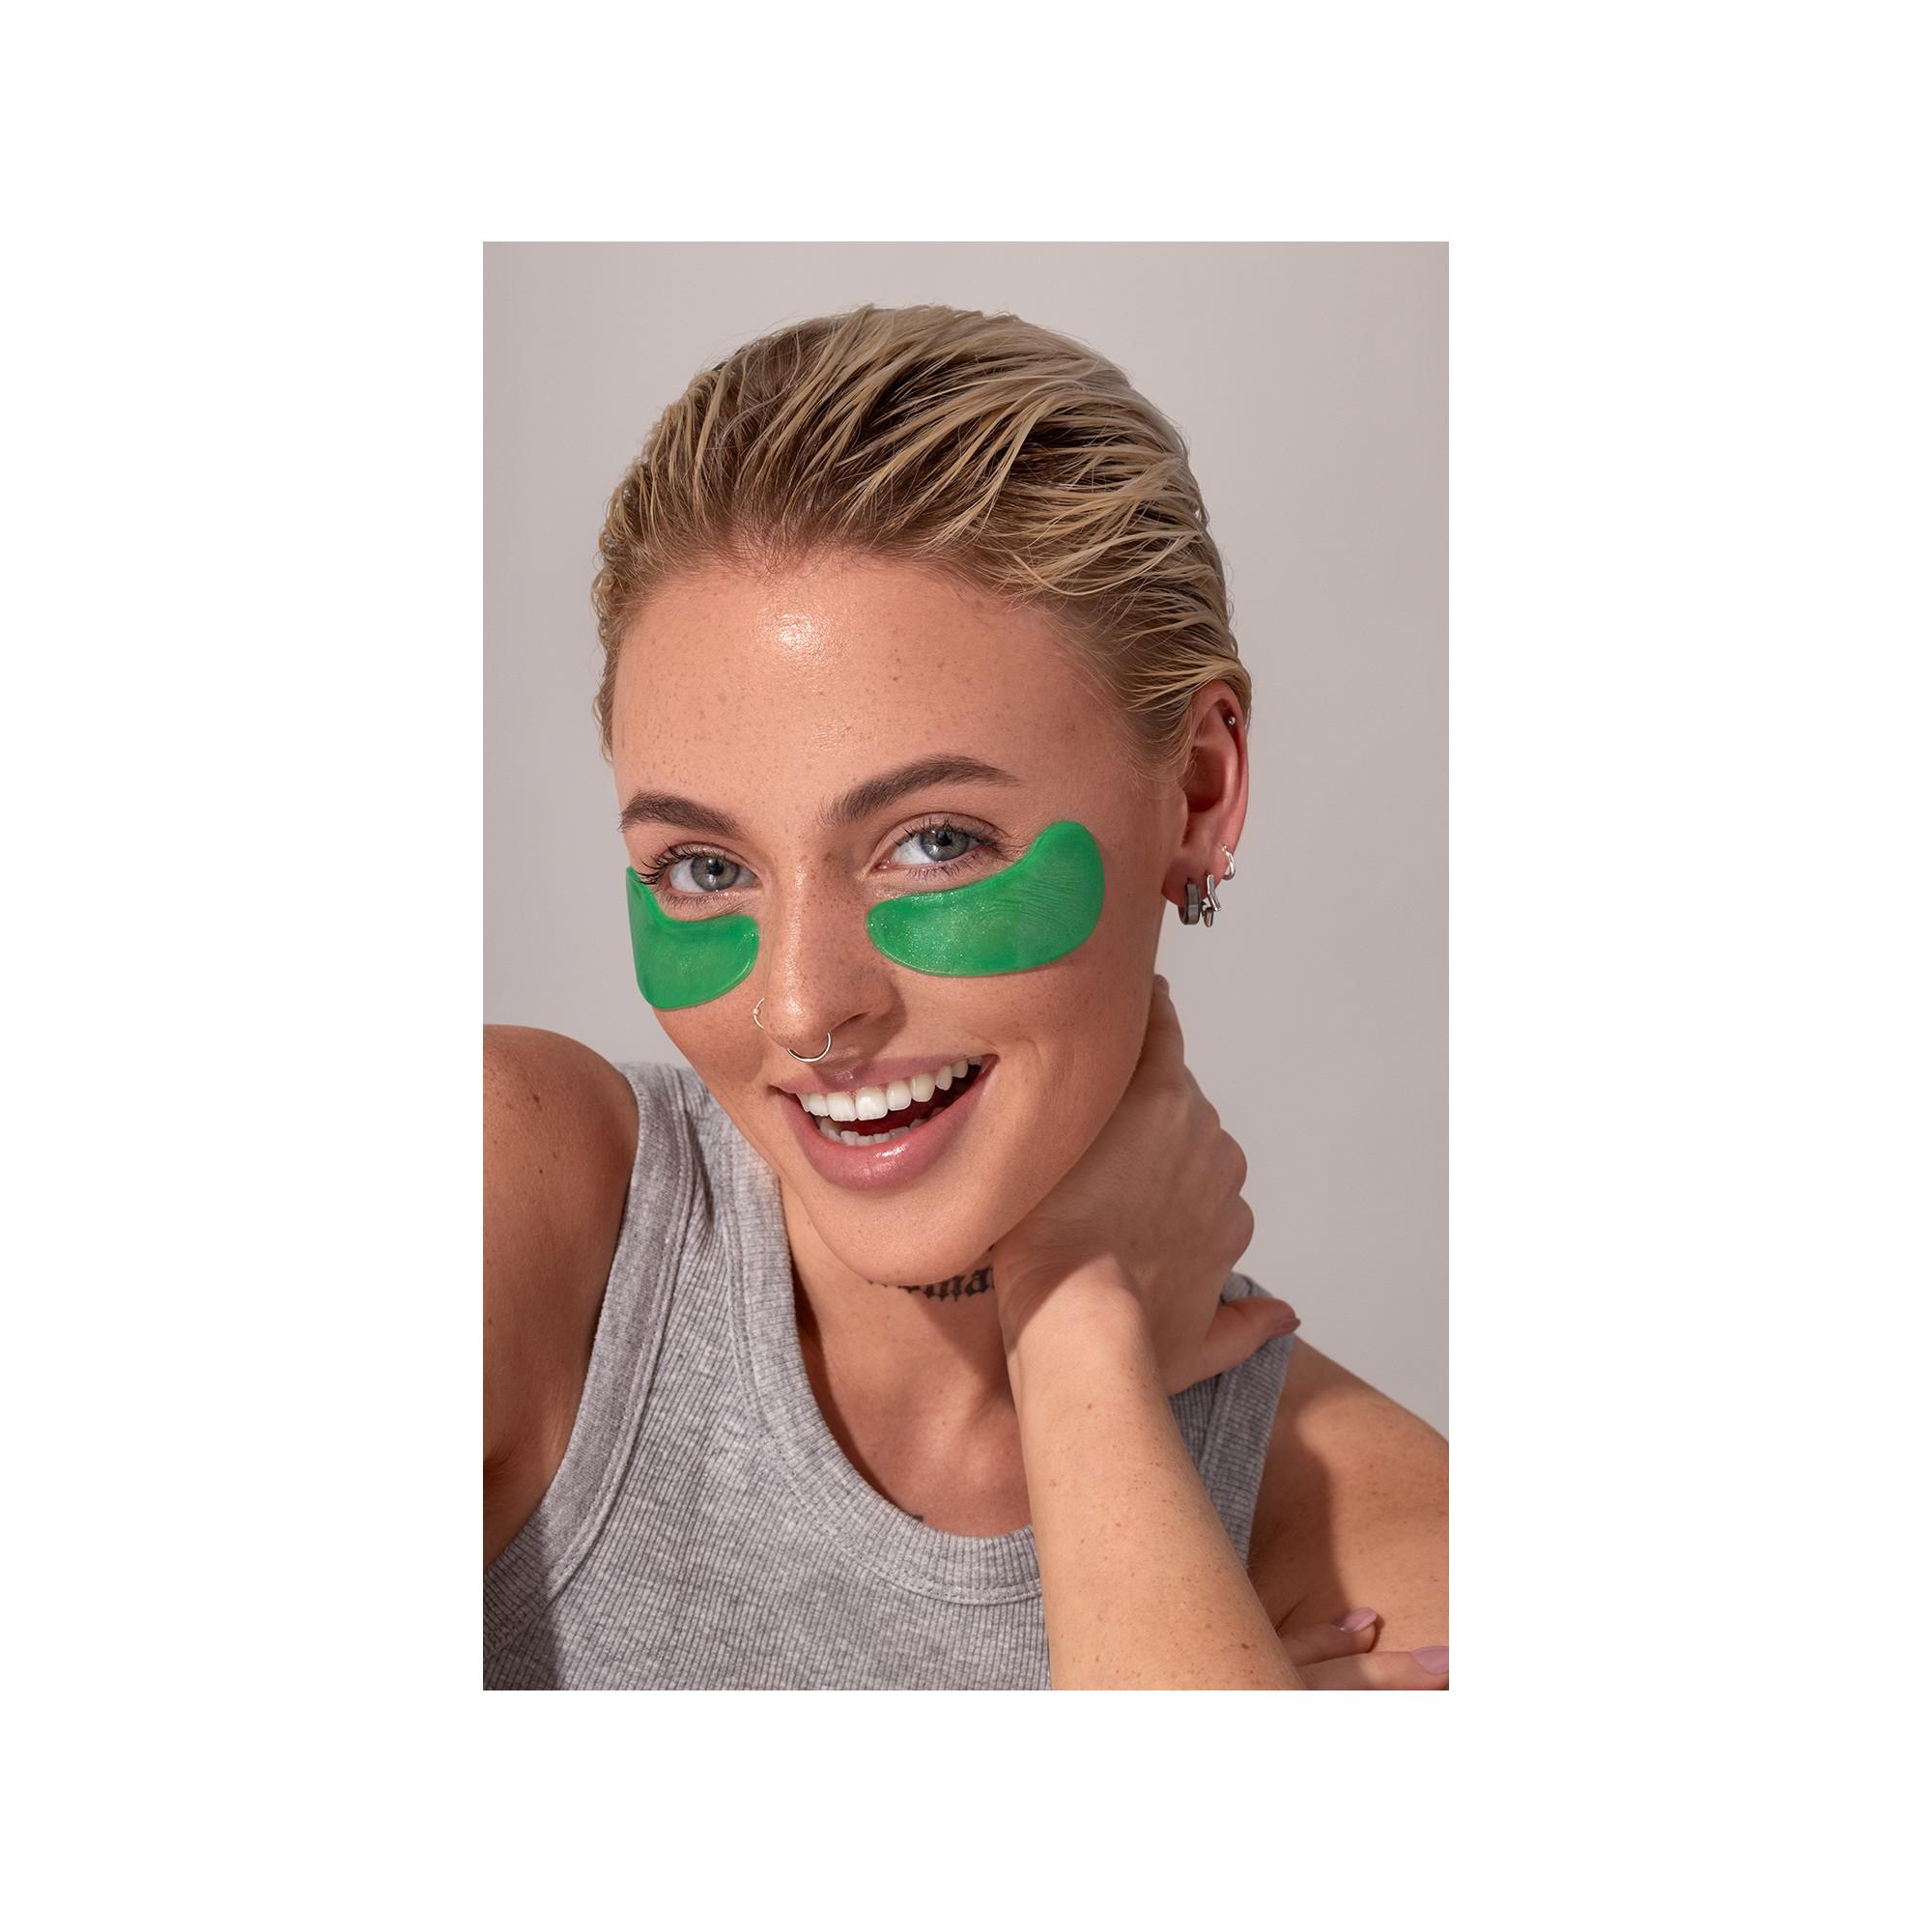 YEAUTY  Cucumber Cooler Eye Pad Mask 